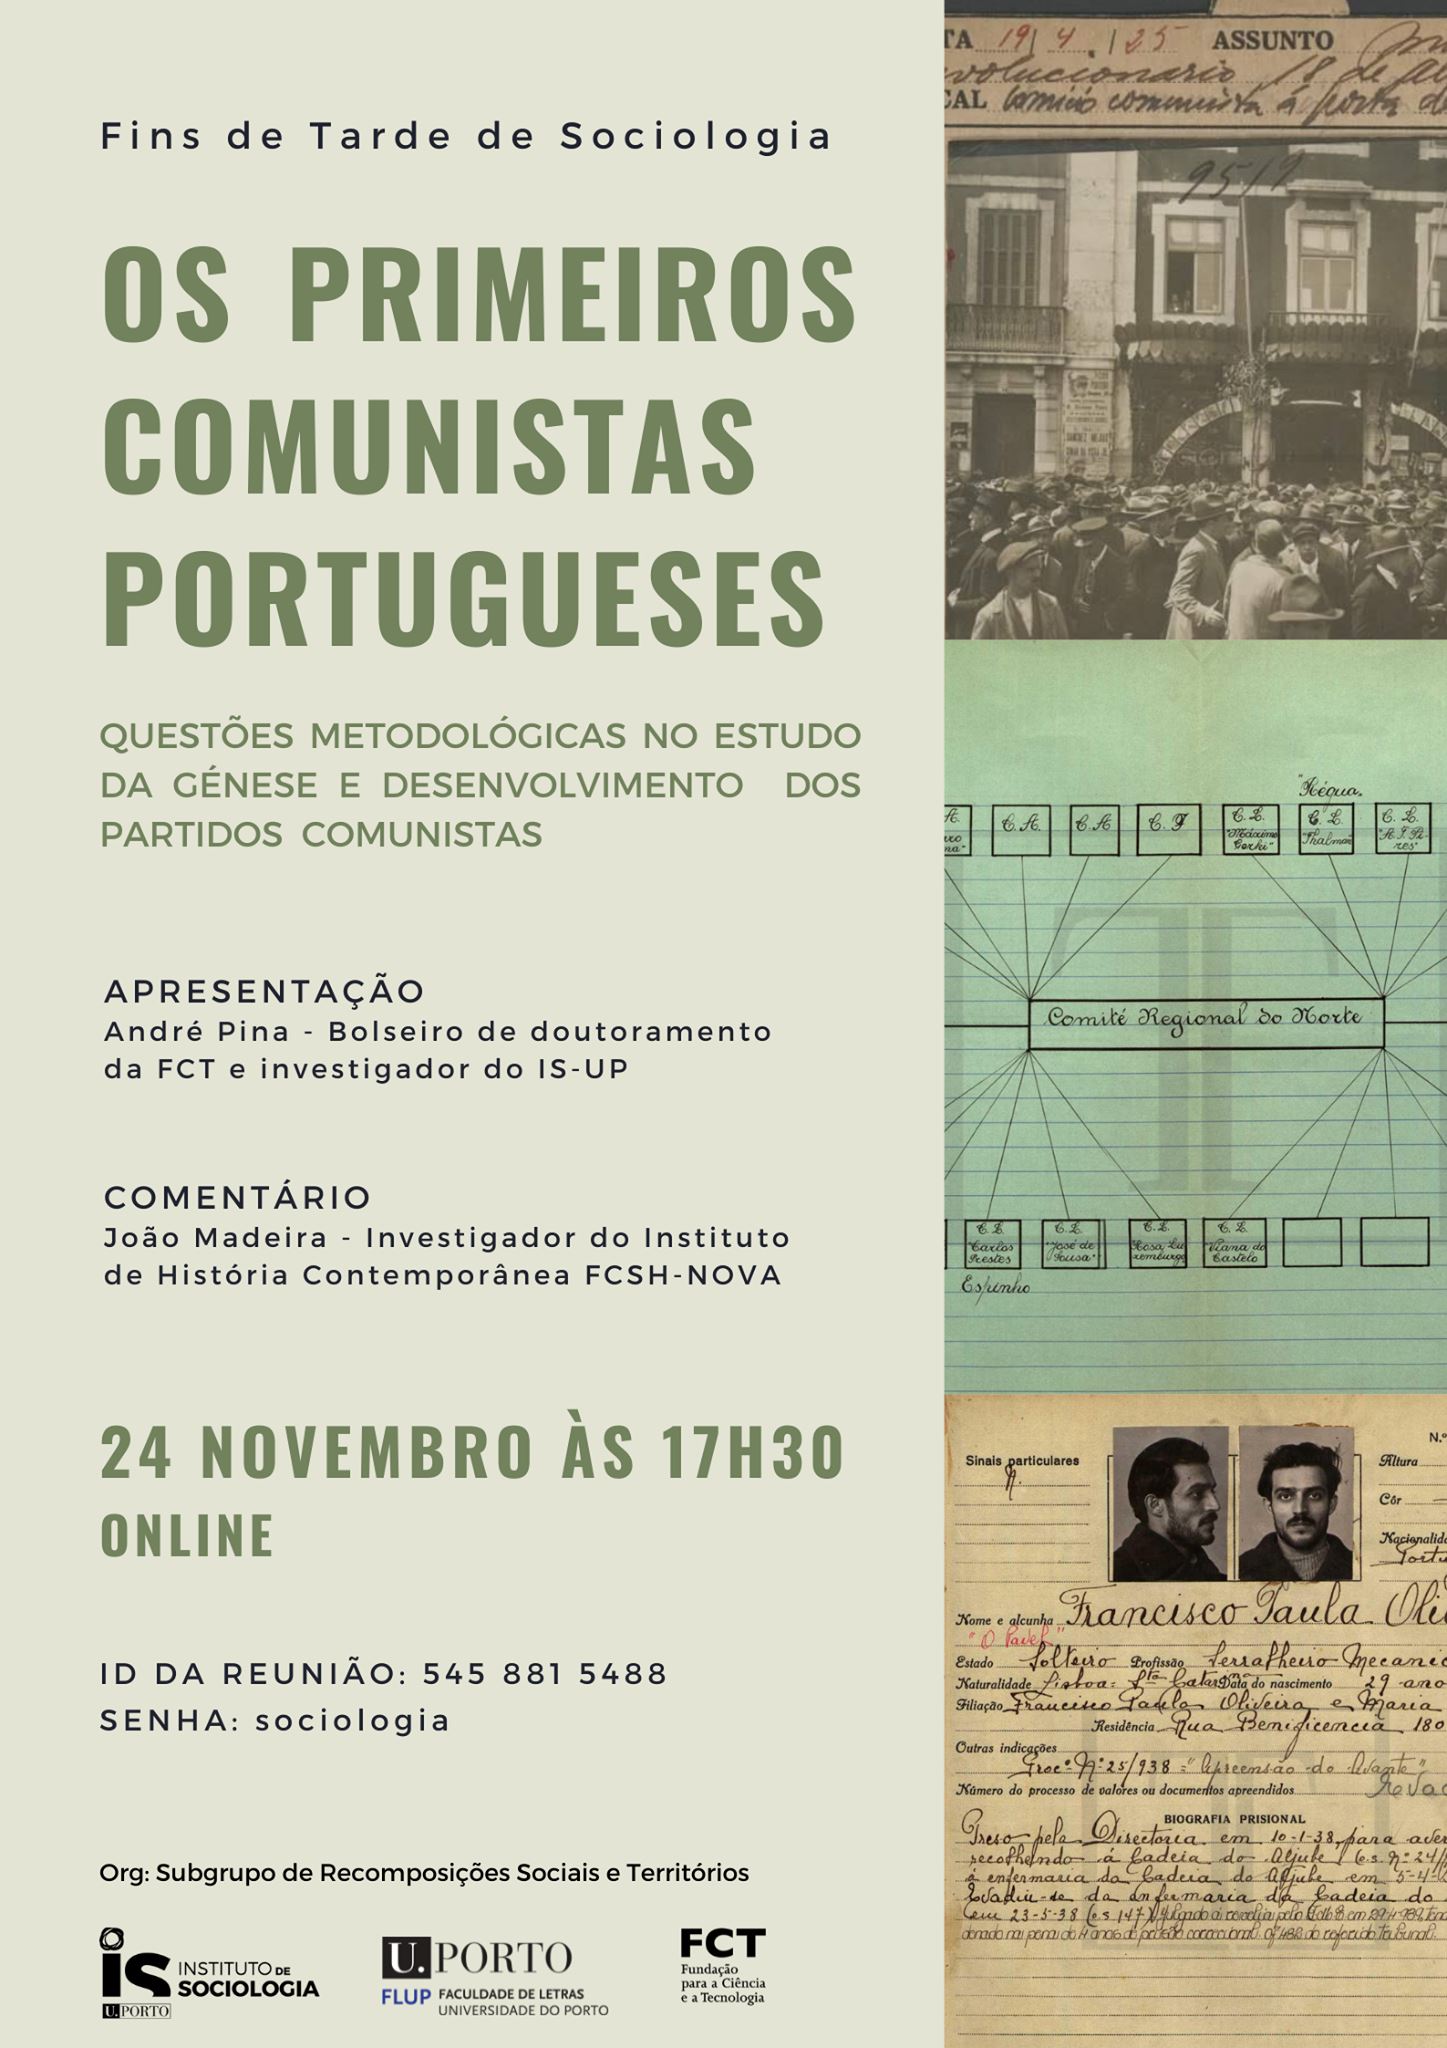 Fins de Tarde de Sociologia | Os primeiros comunistas portugueses